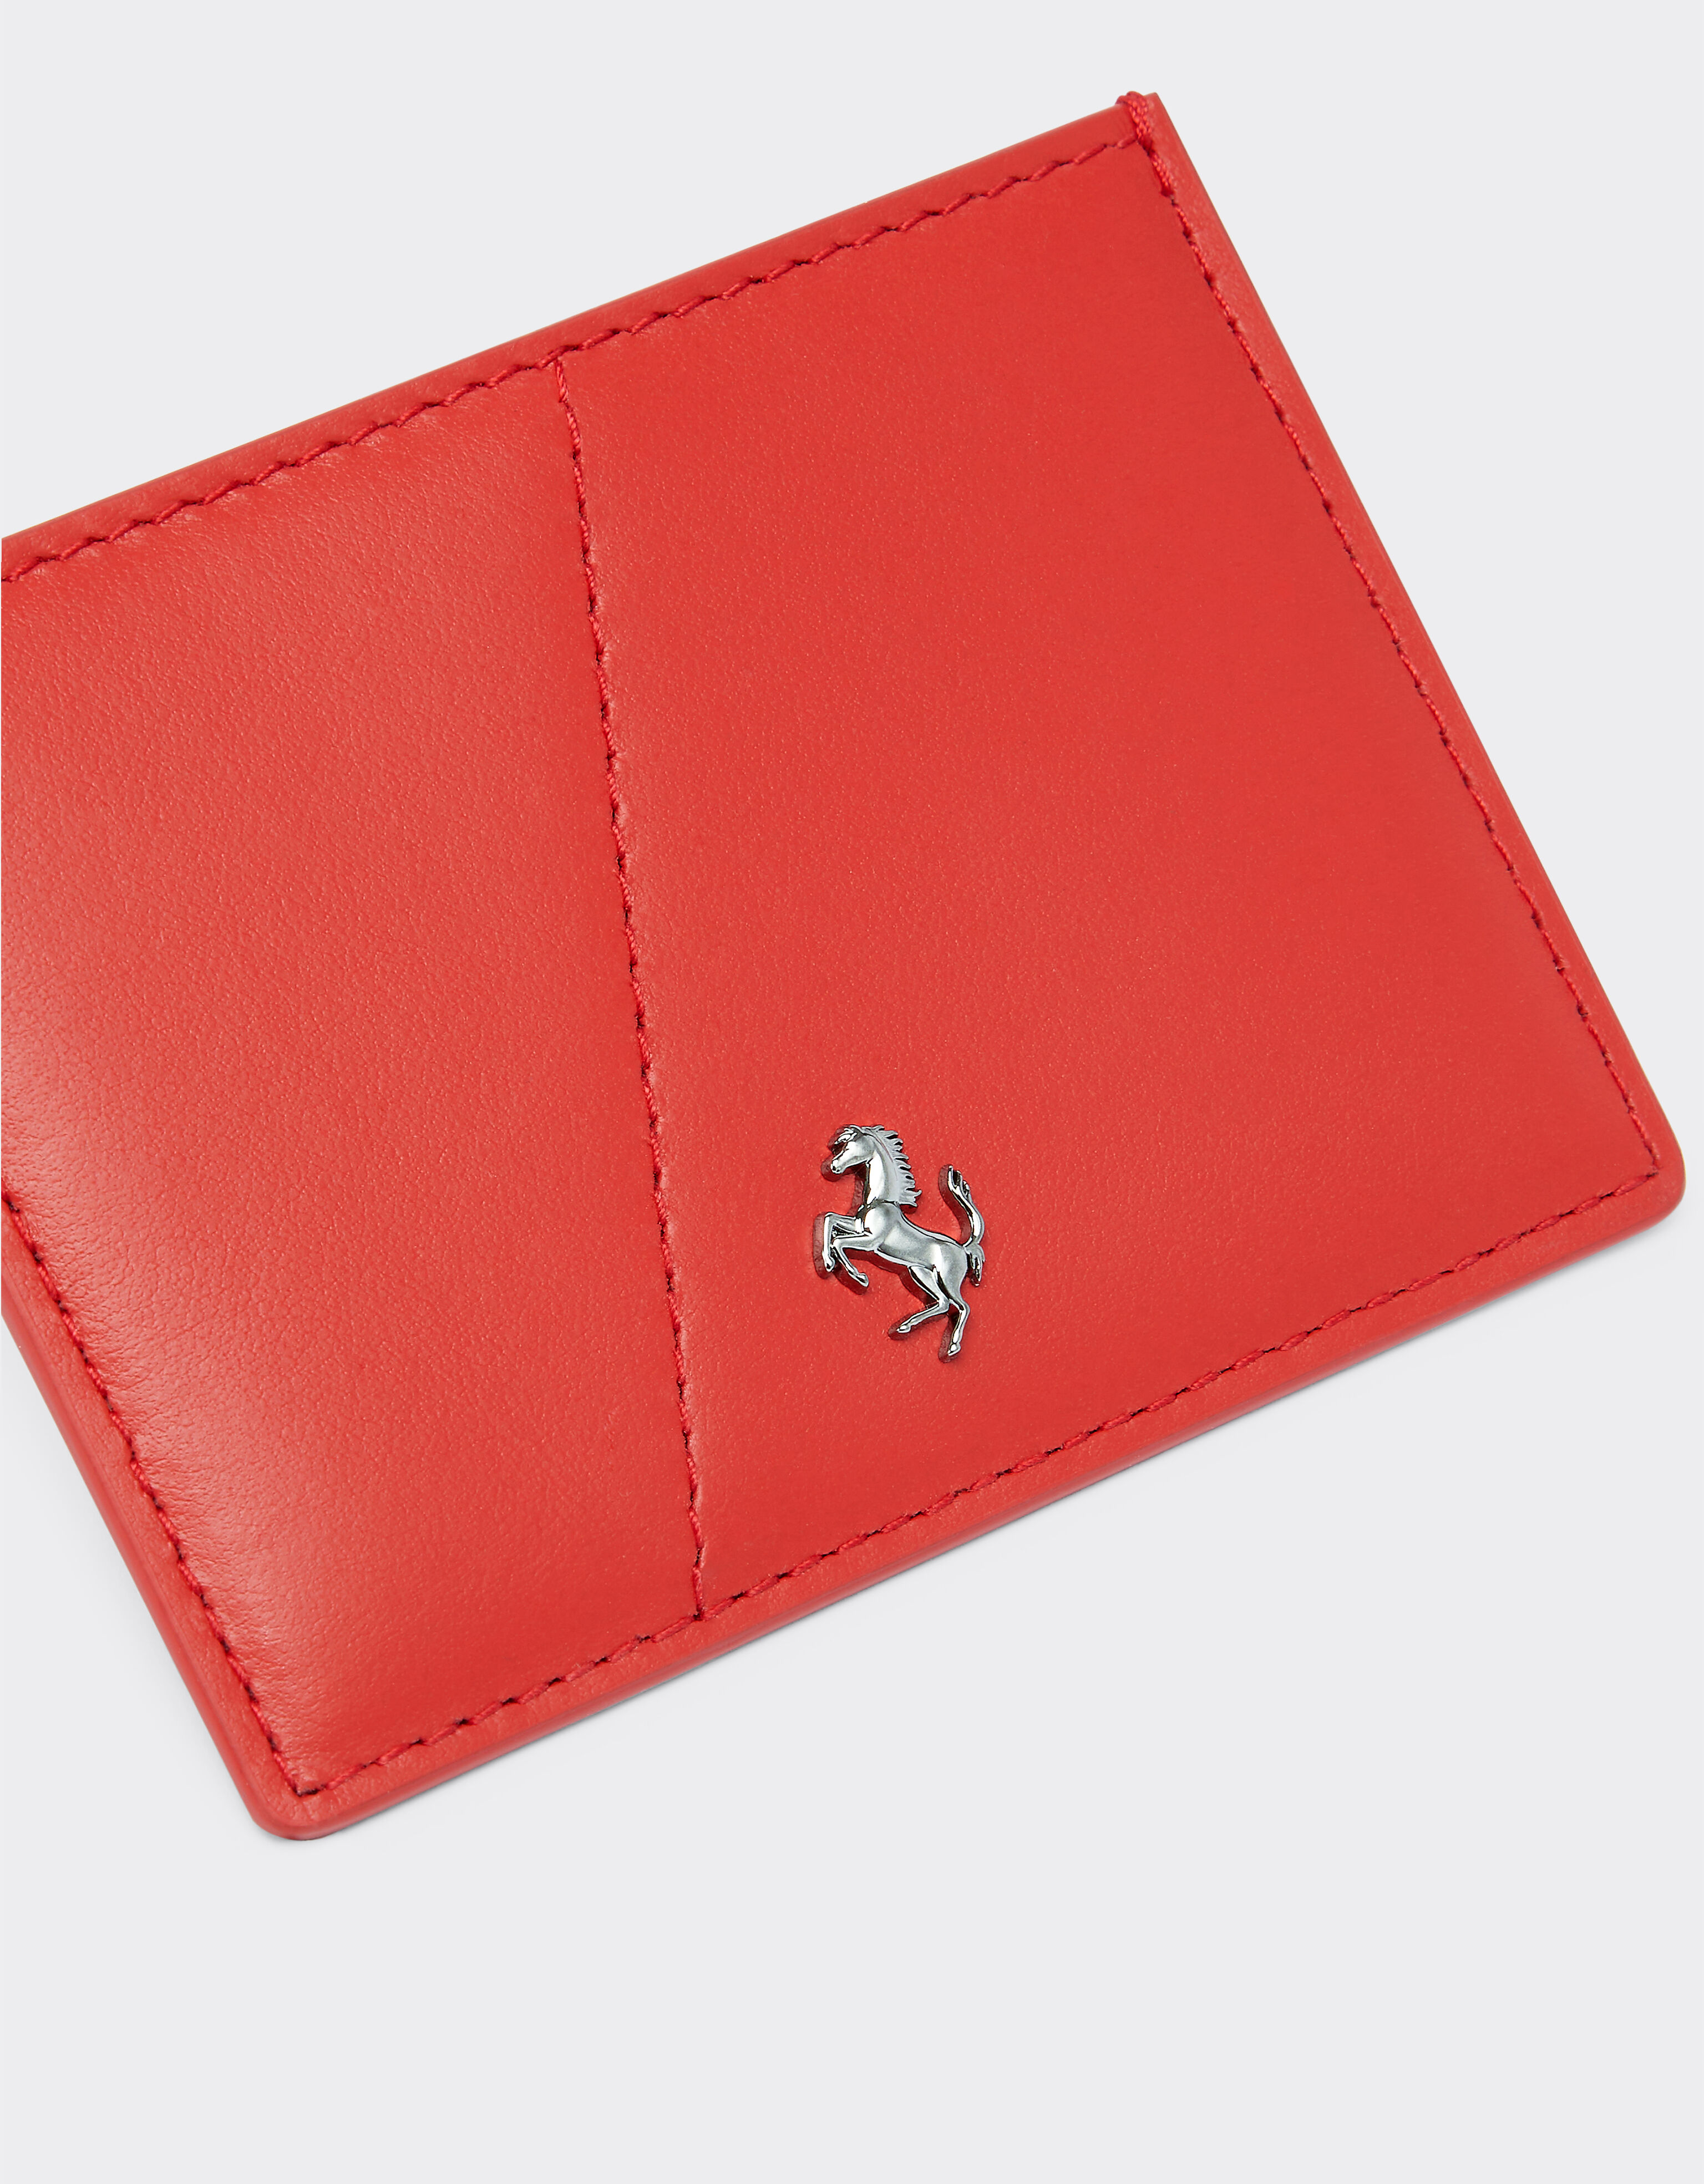 Ferrari Smooth leather card holder Rosso Dino 20619f